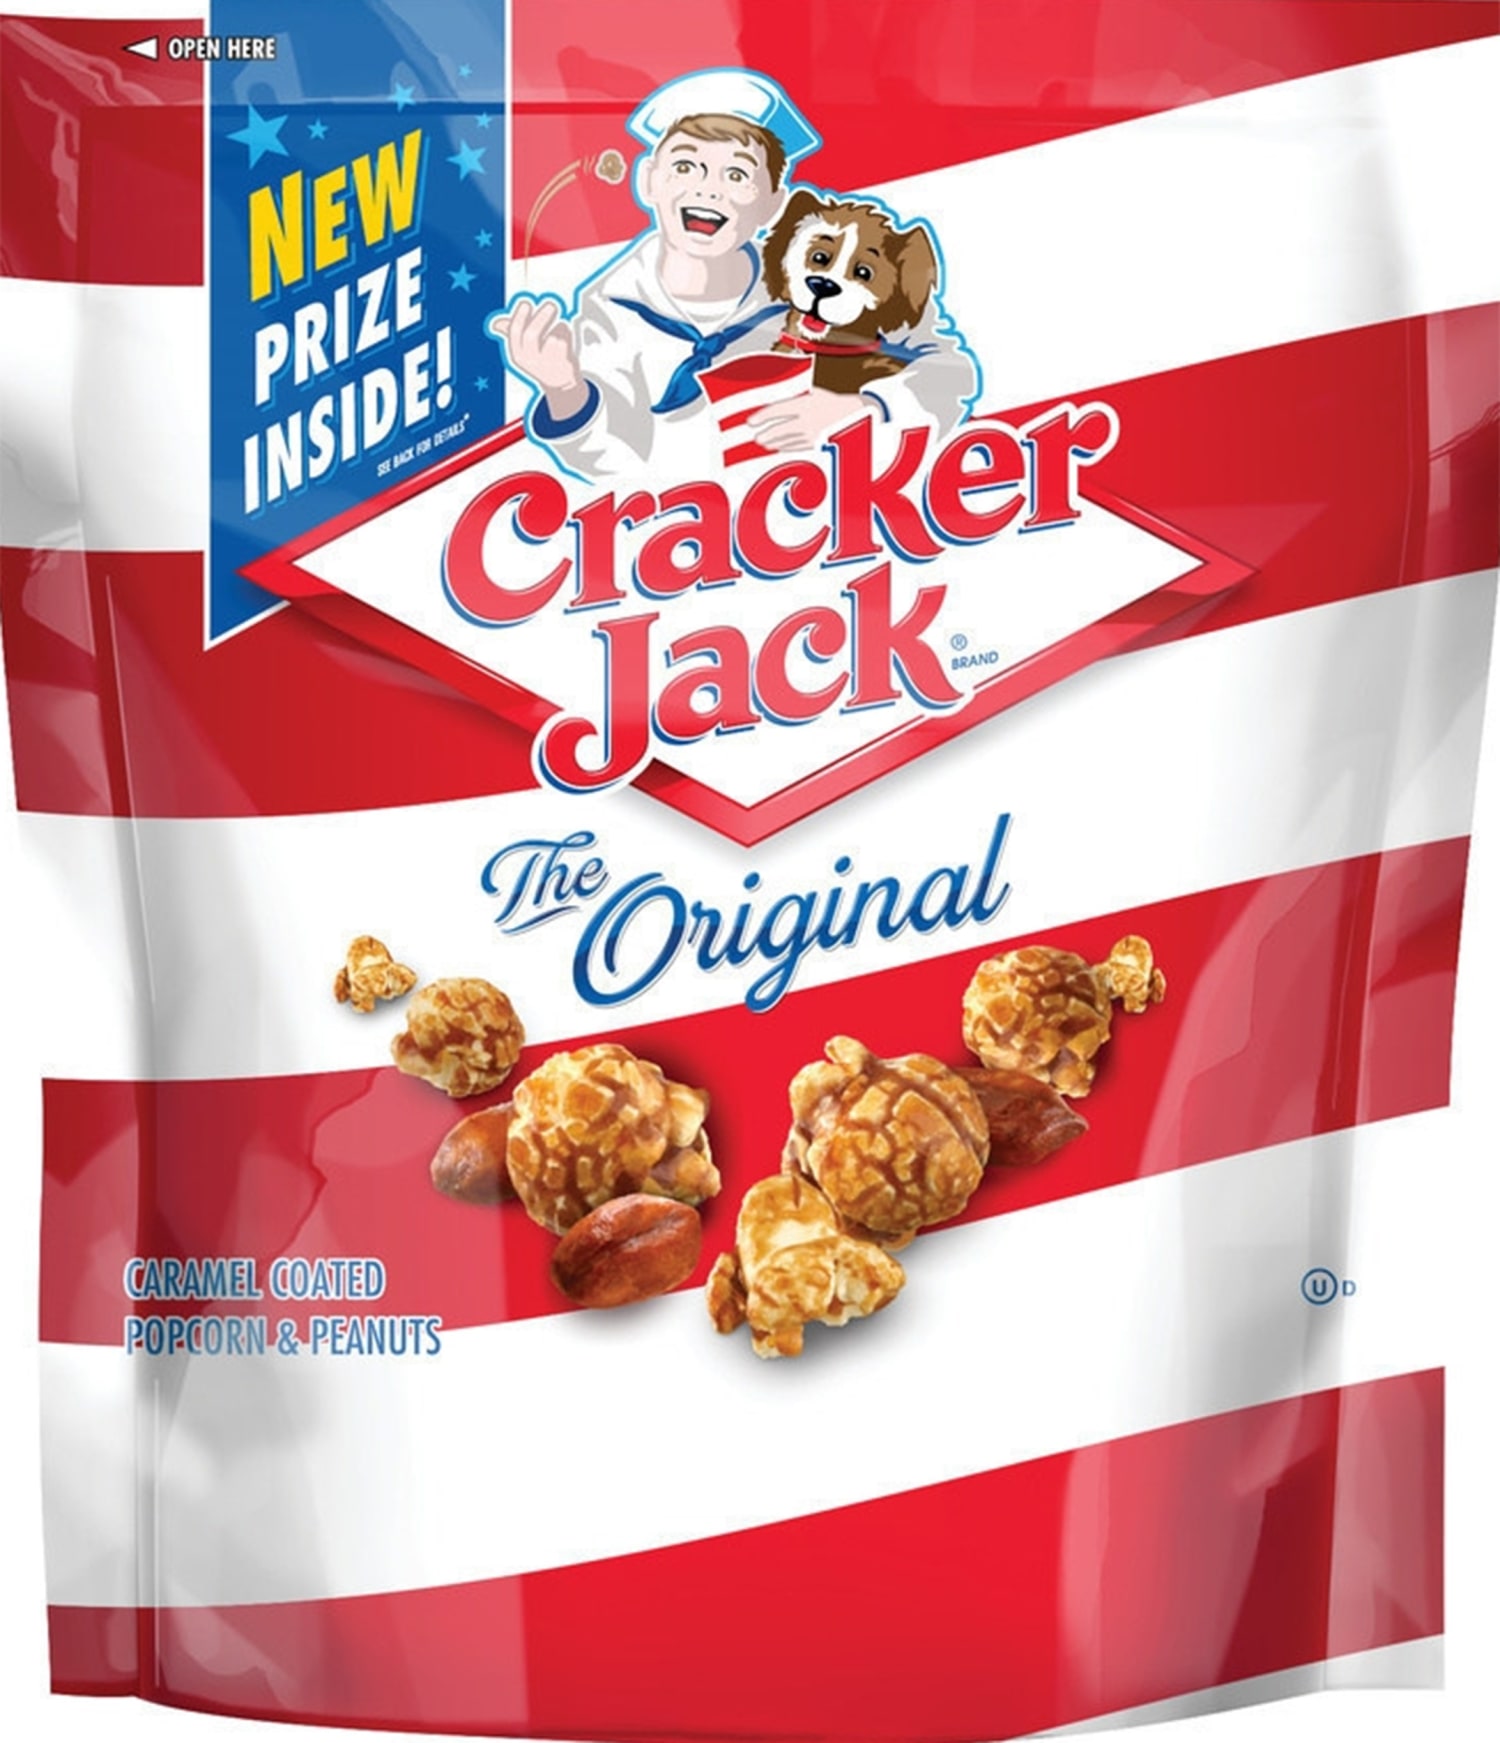 Prizes cracker jack most valuable Cracker Jack